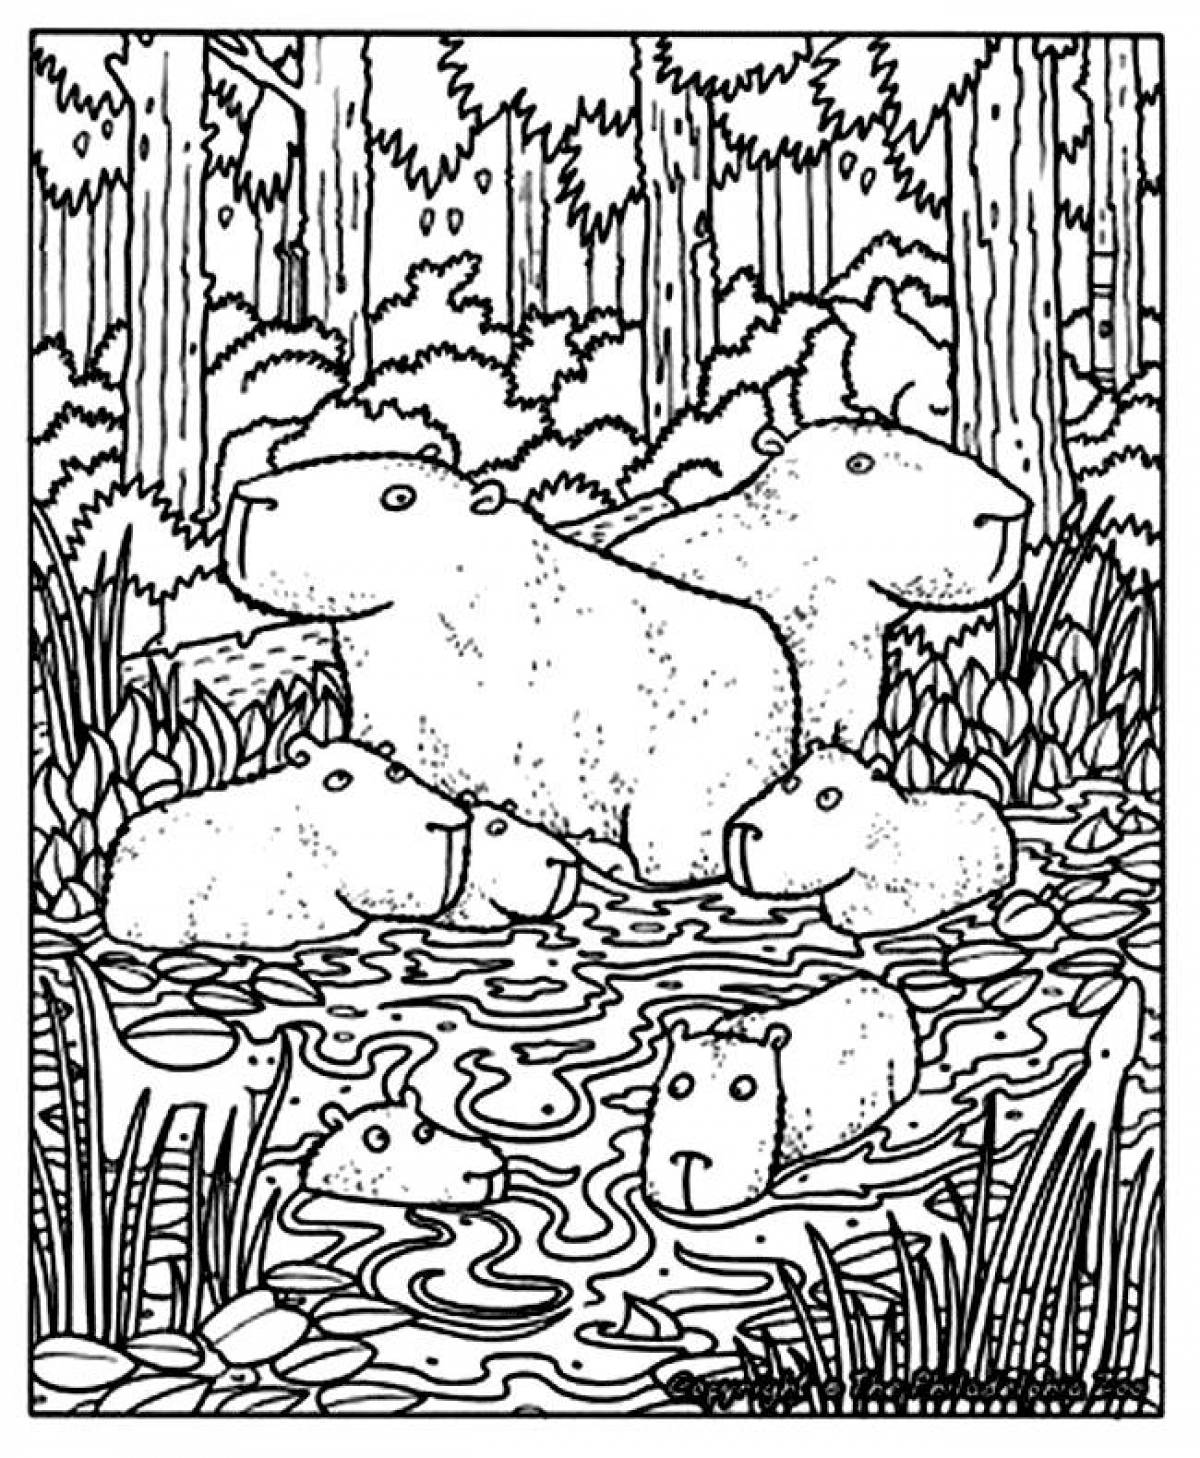 Brilliant capybara coloring book